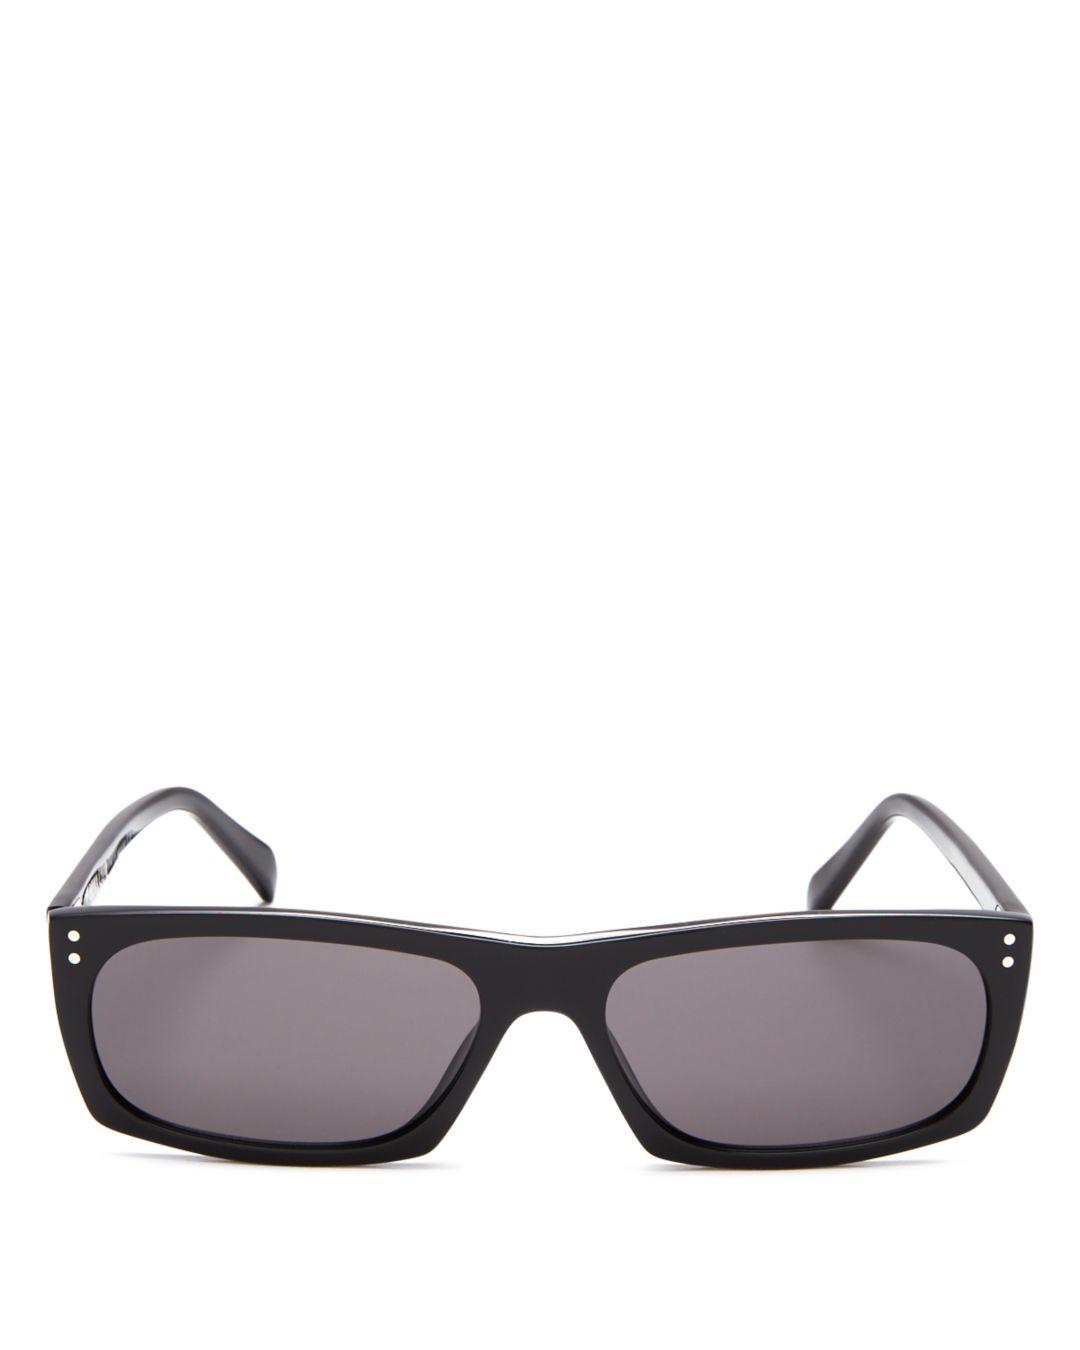 Celine Men's Square Sunglasses in Shiny Black/Smoke (Black) for Men - Lyst